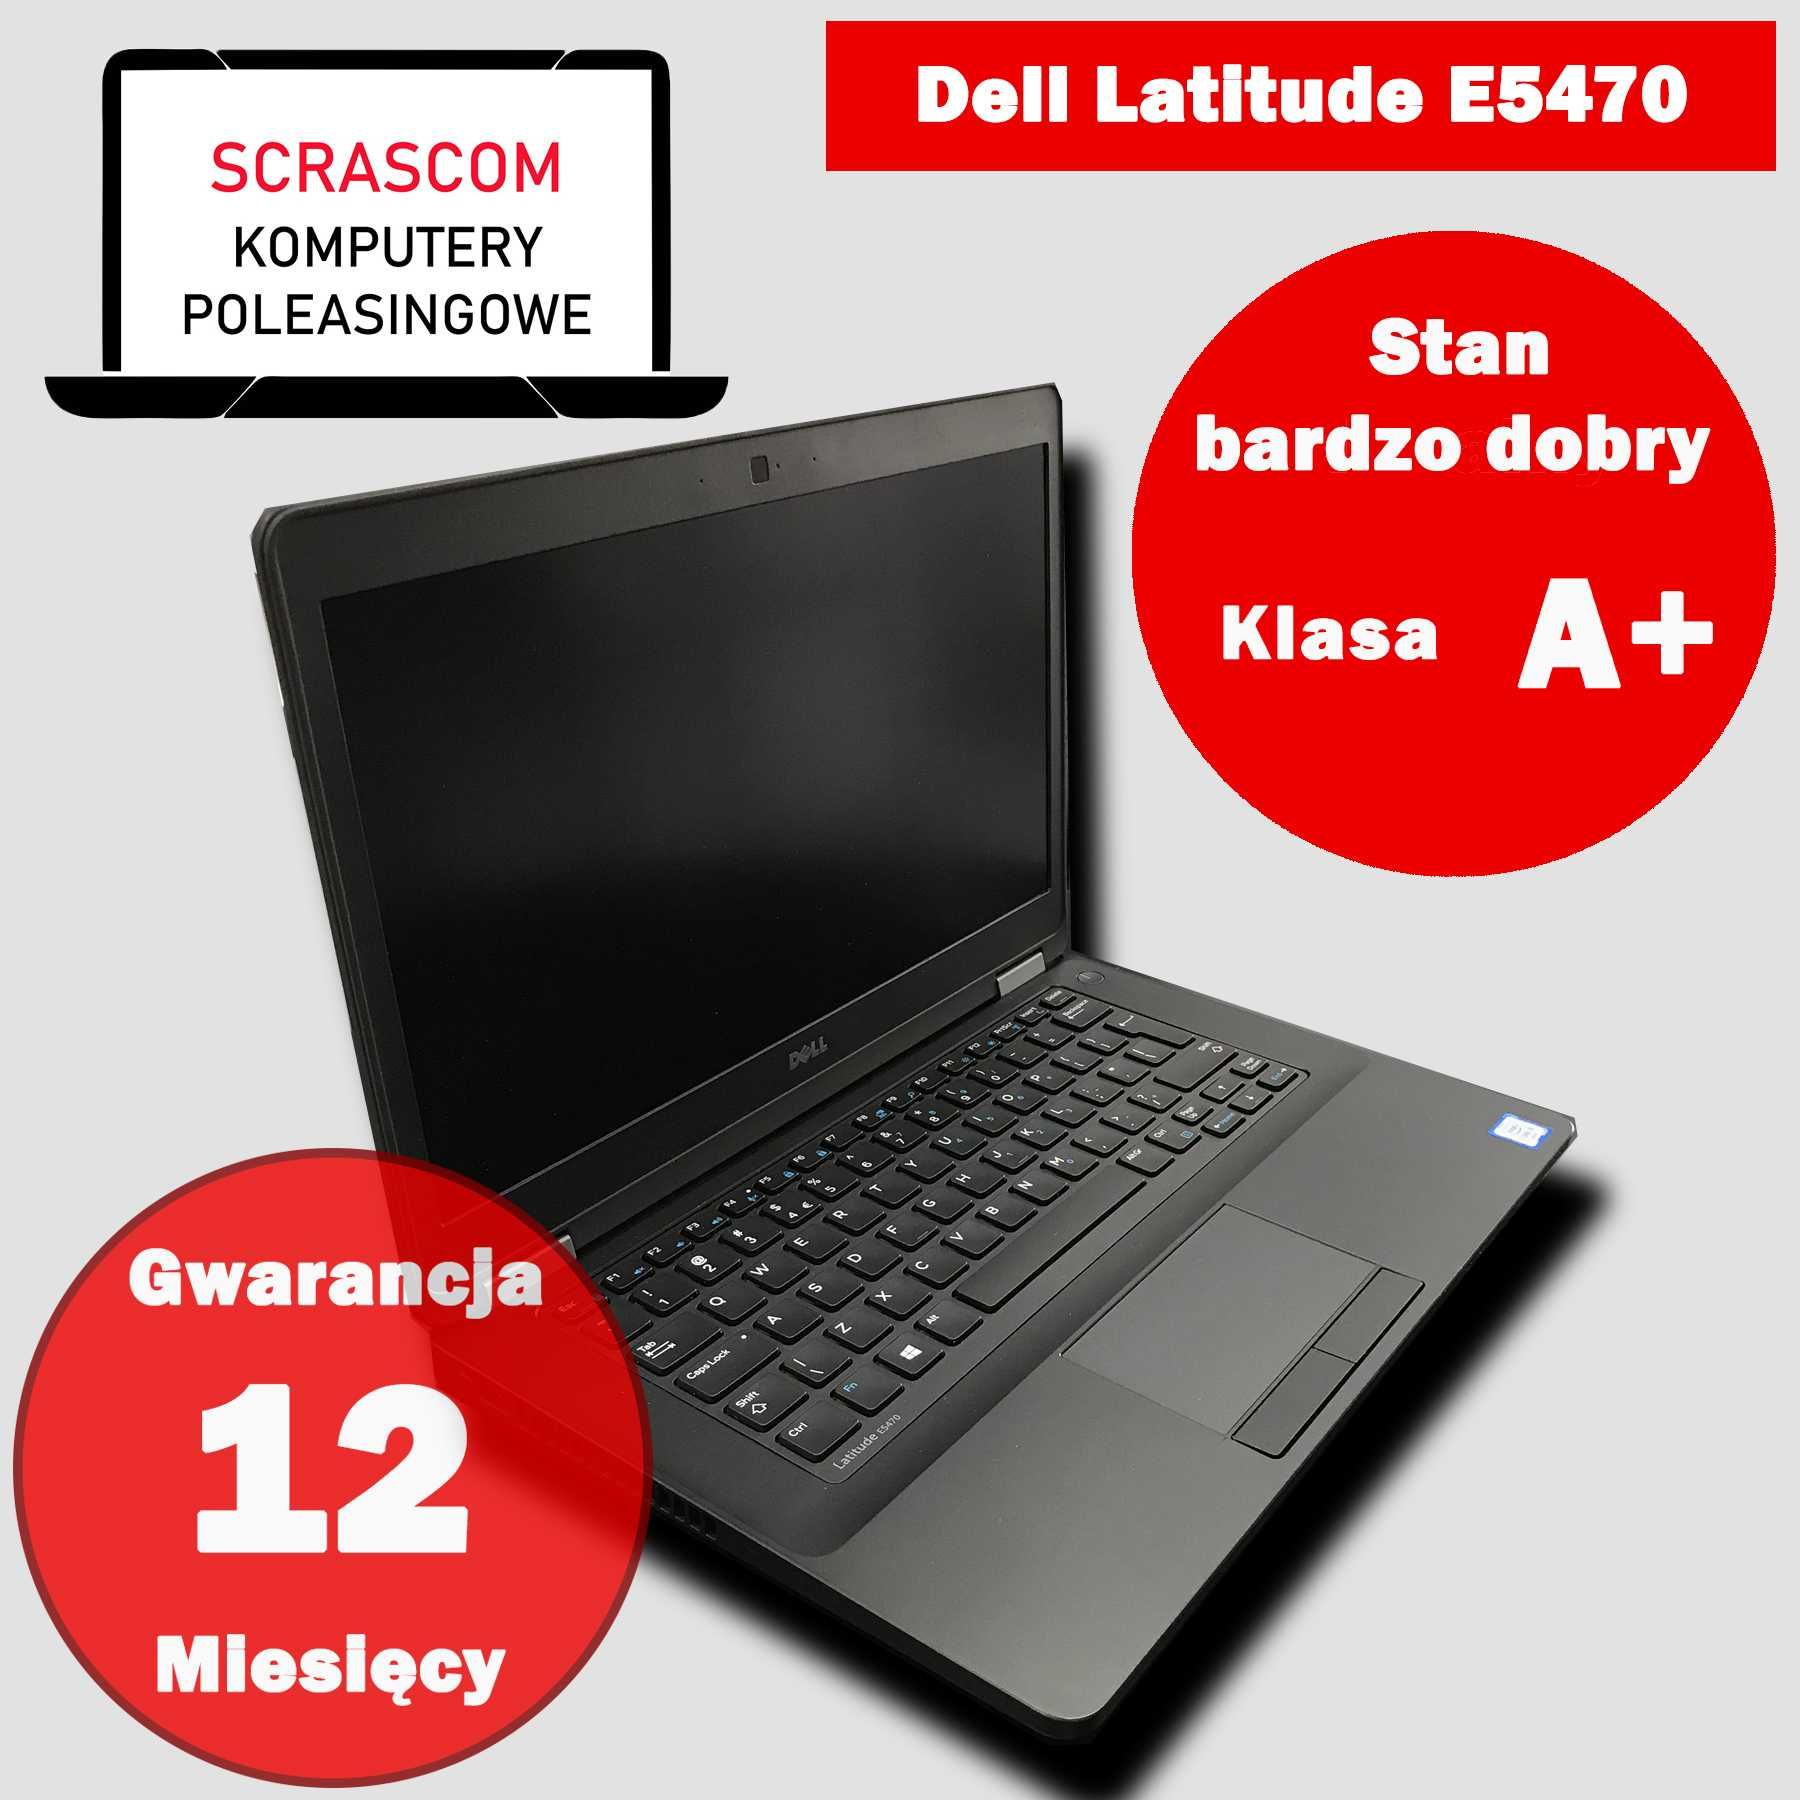 Laptop Dell Latitude E5470 i5 8GB 256GB SSD Windows 10 GWAR 12msc